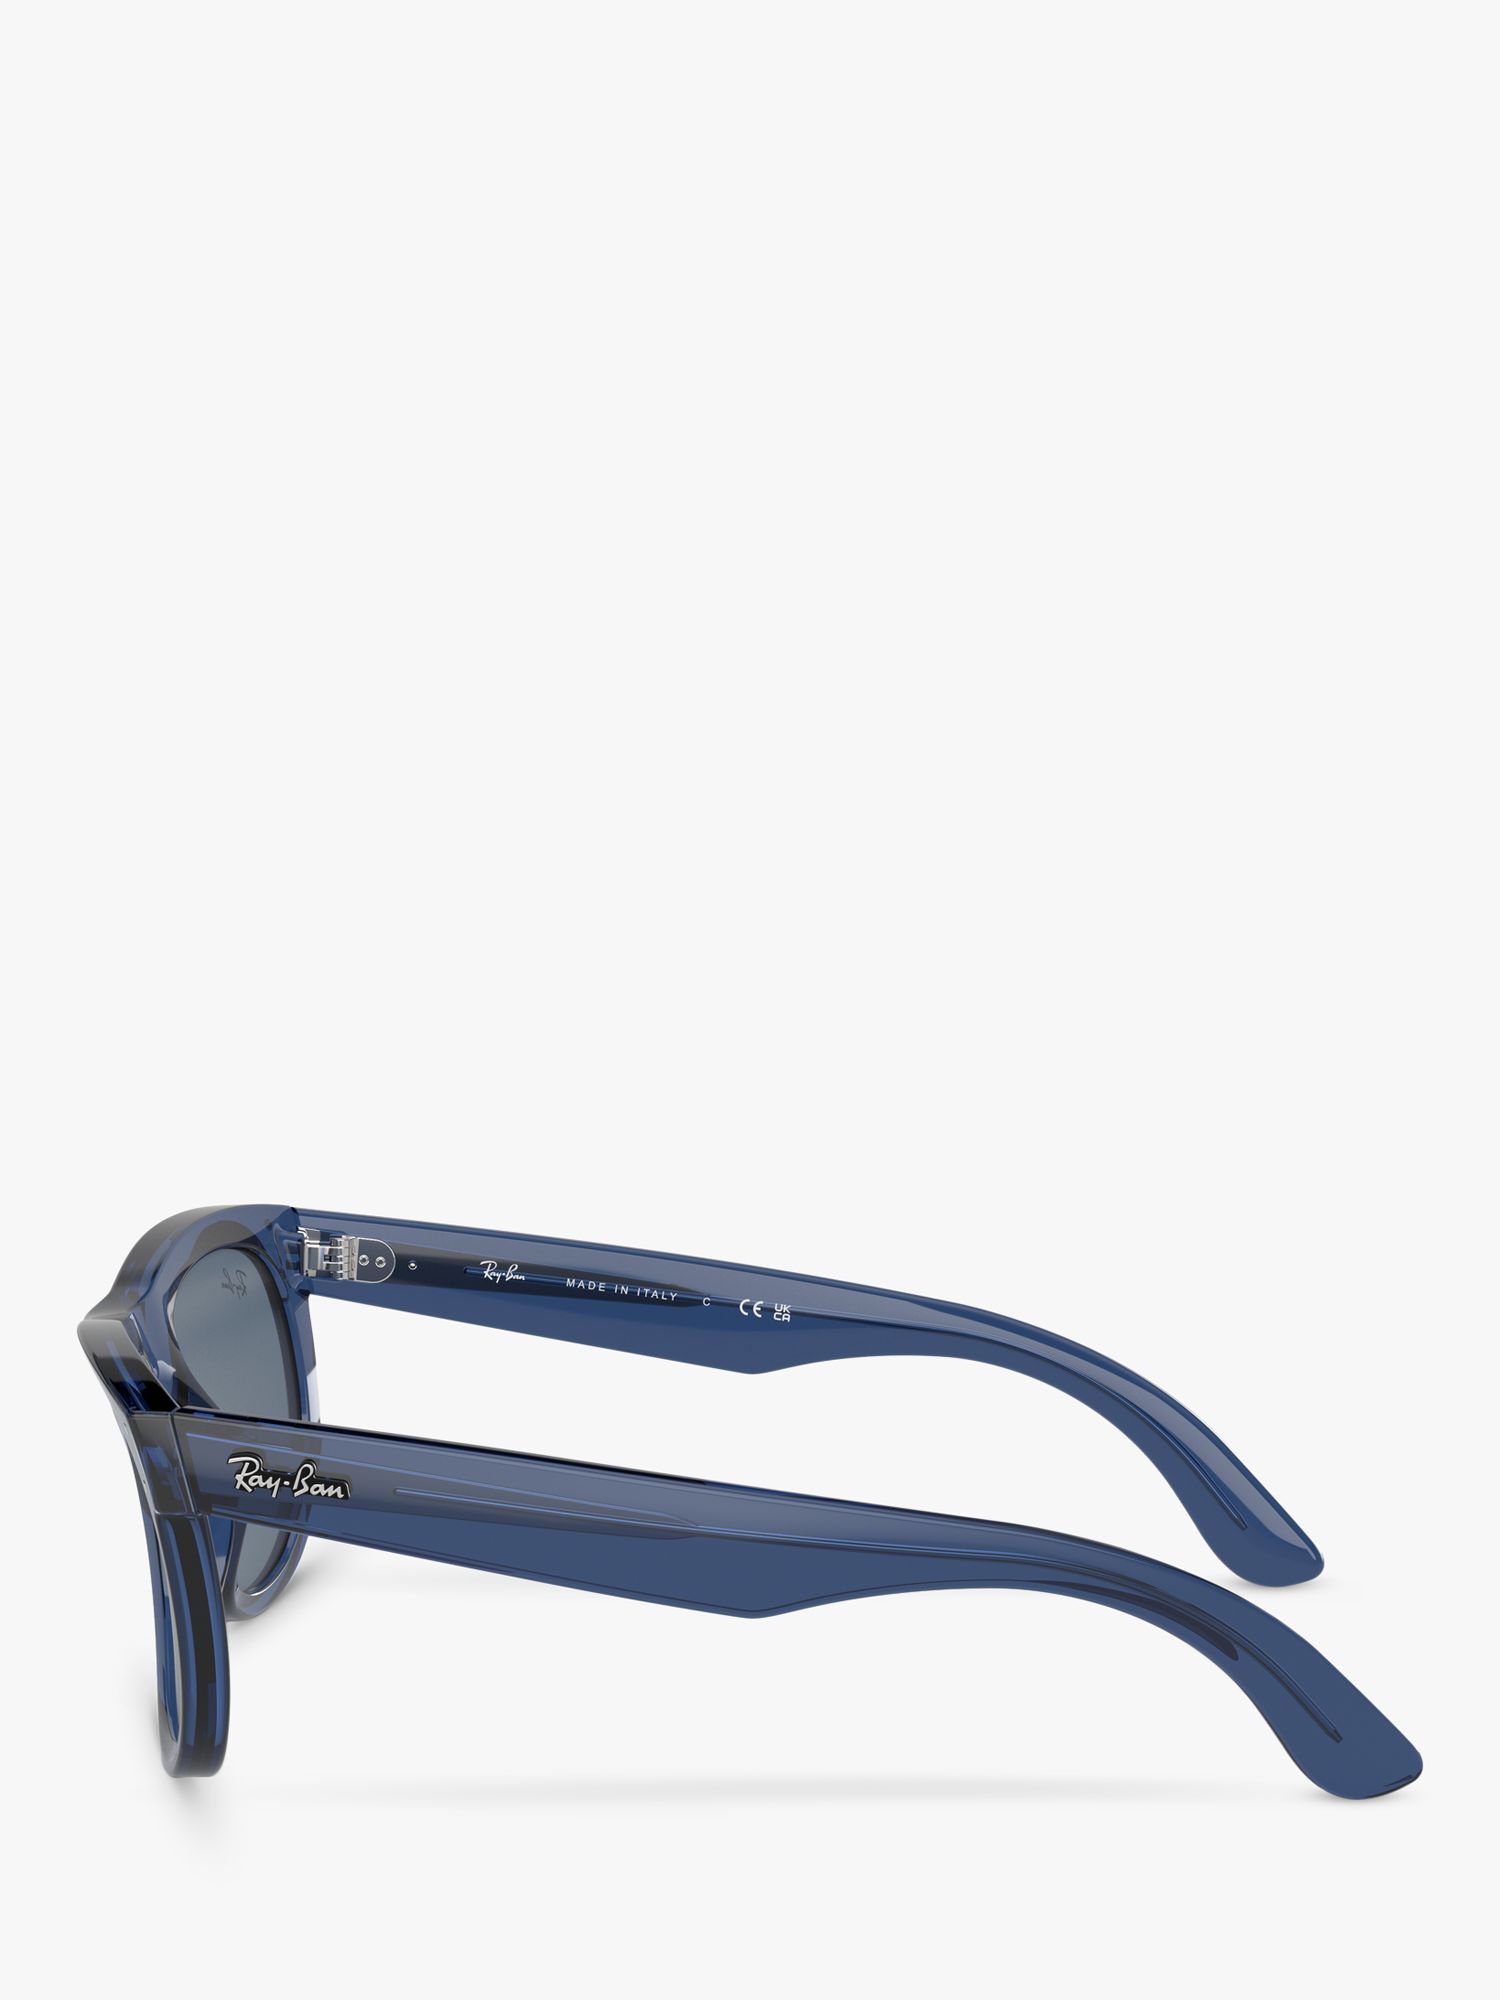 Ray-Ban RBR0502S Unisex Wayfarer Reverse Sunglasses, Transparent Navy Blue/Blue